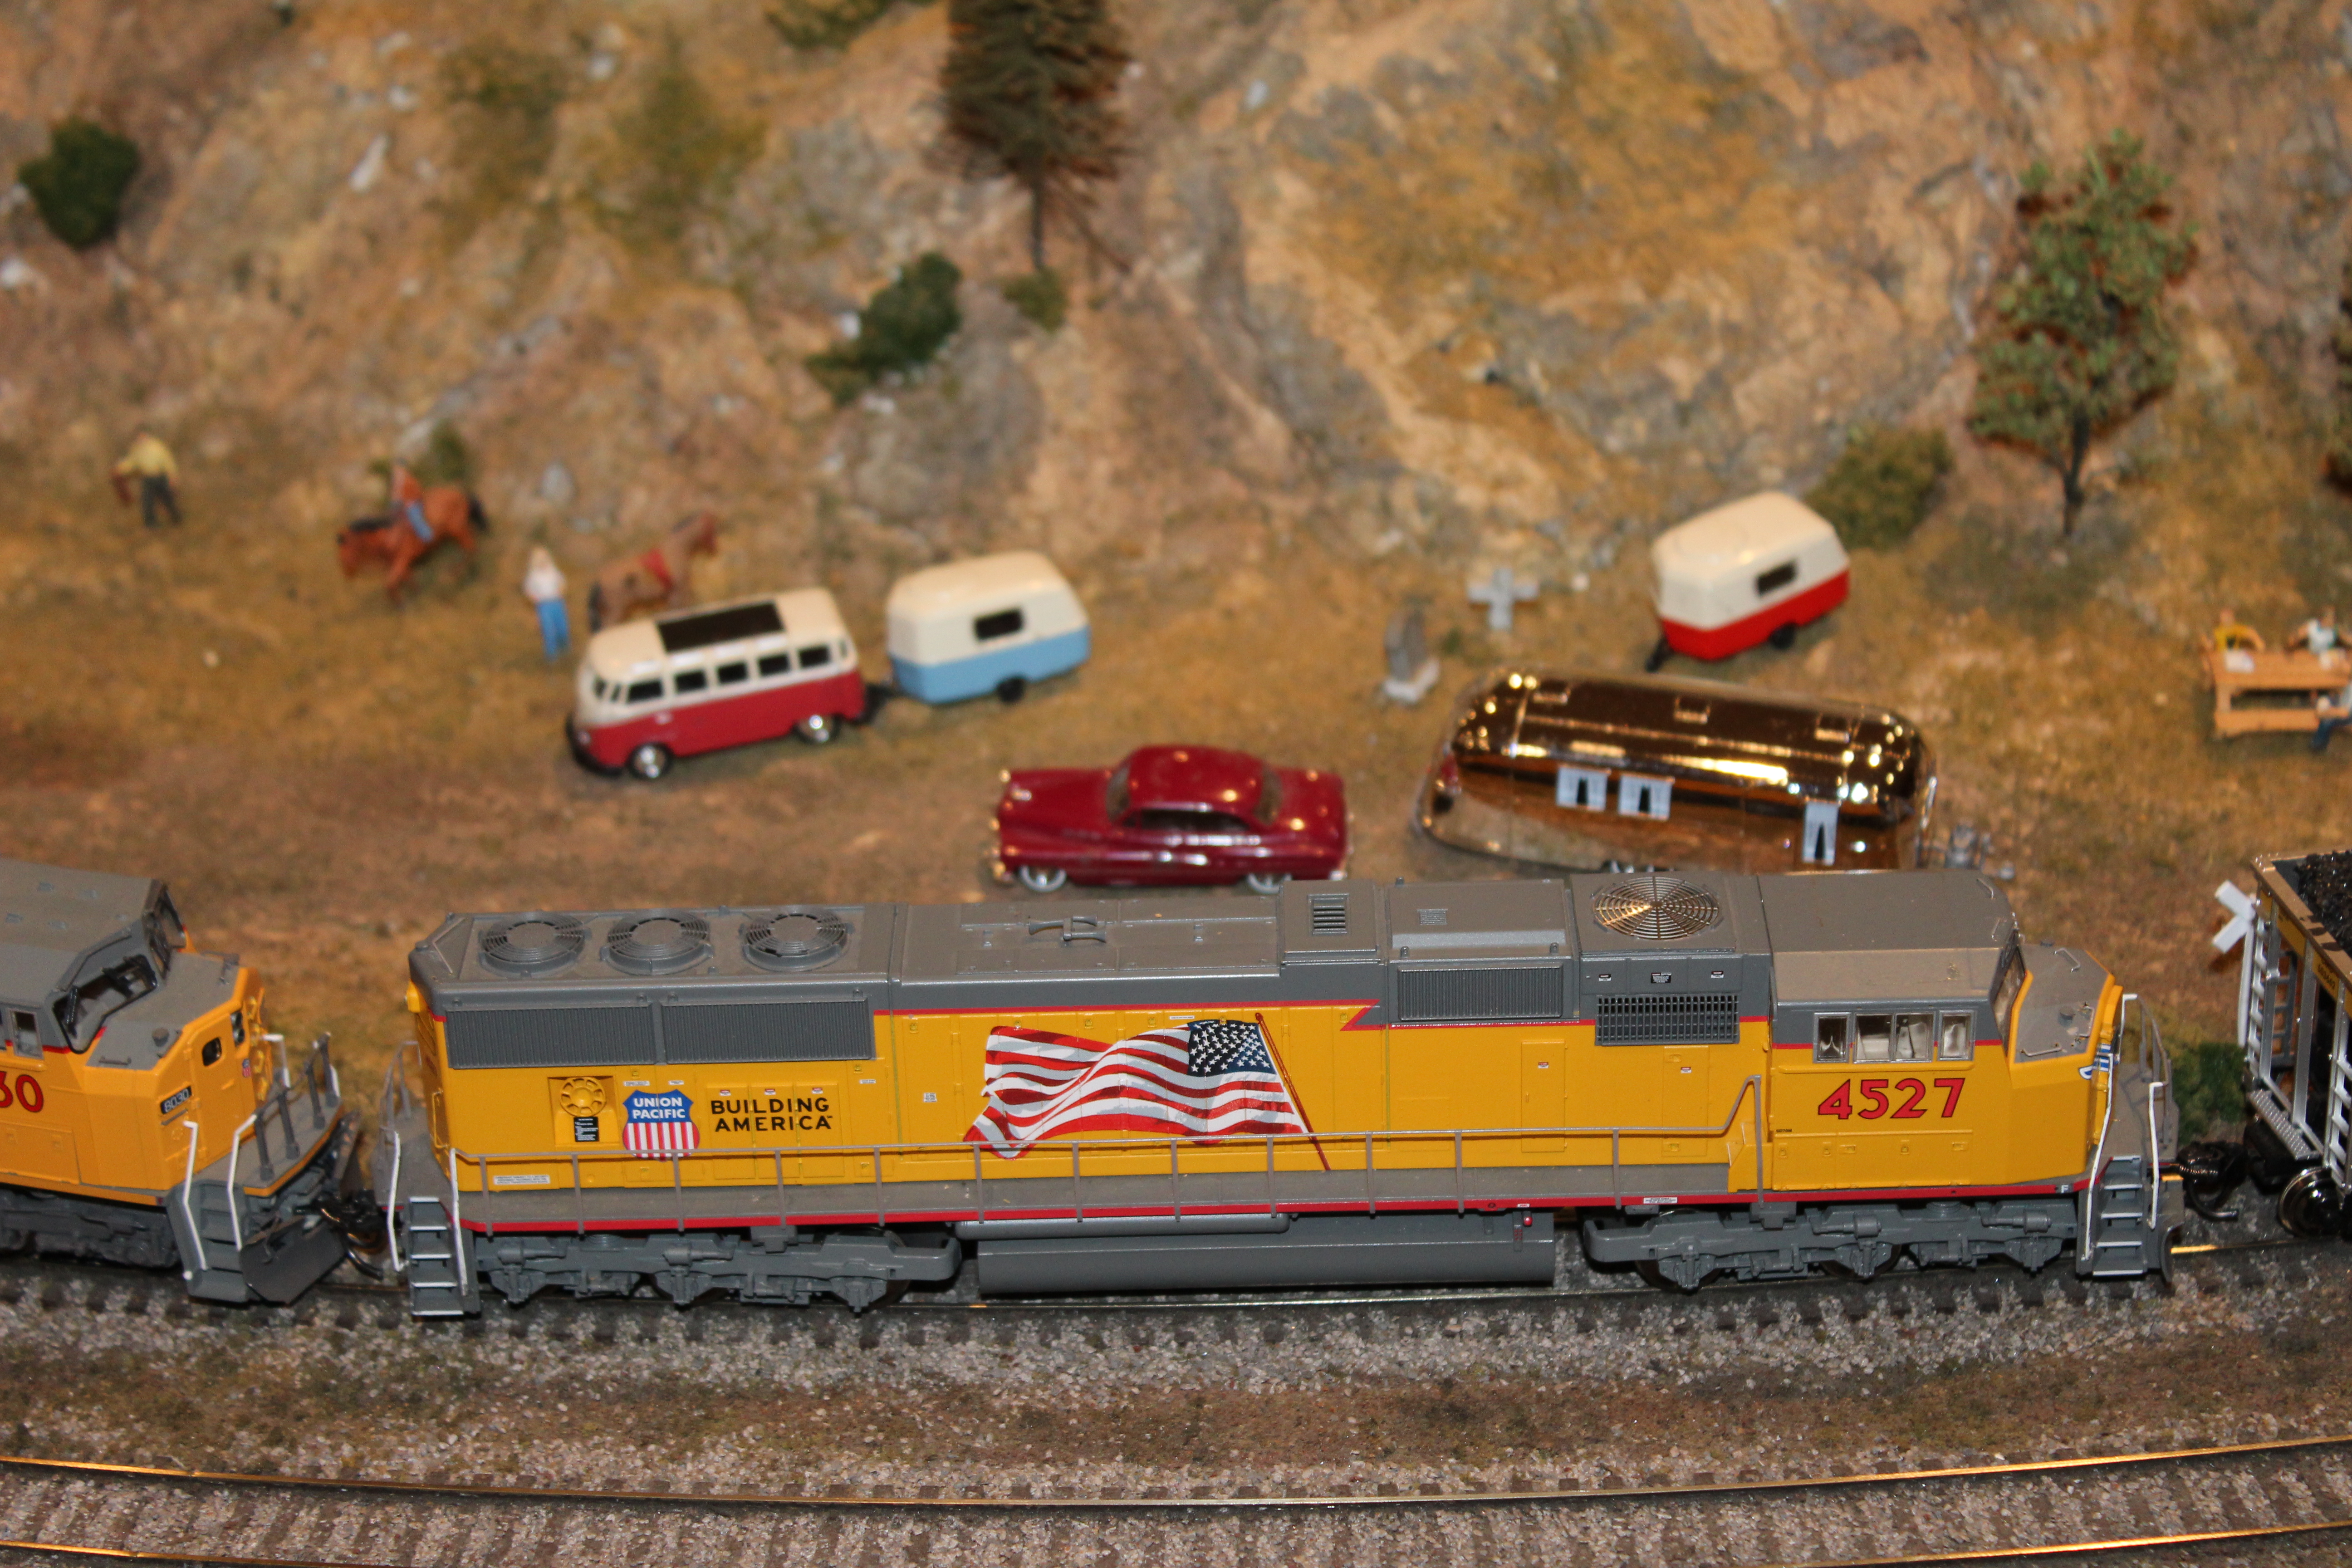 Spring Creek Model Railroad Club